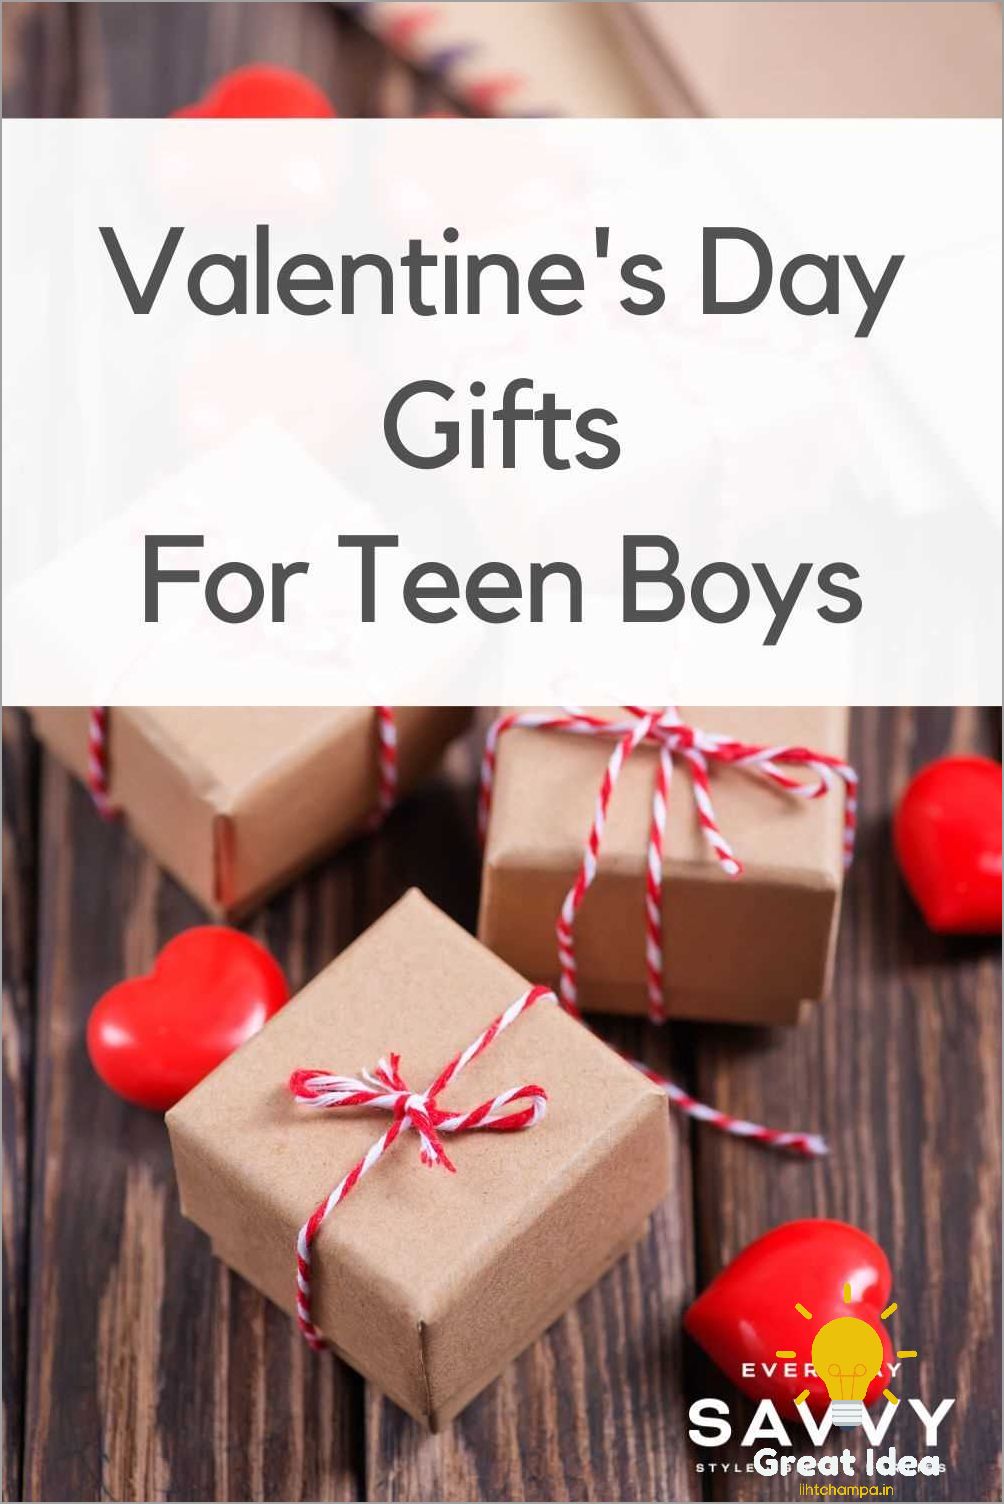 Romantic Gift Ideas